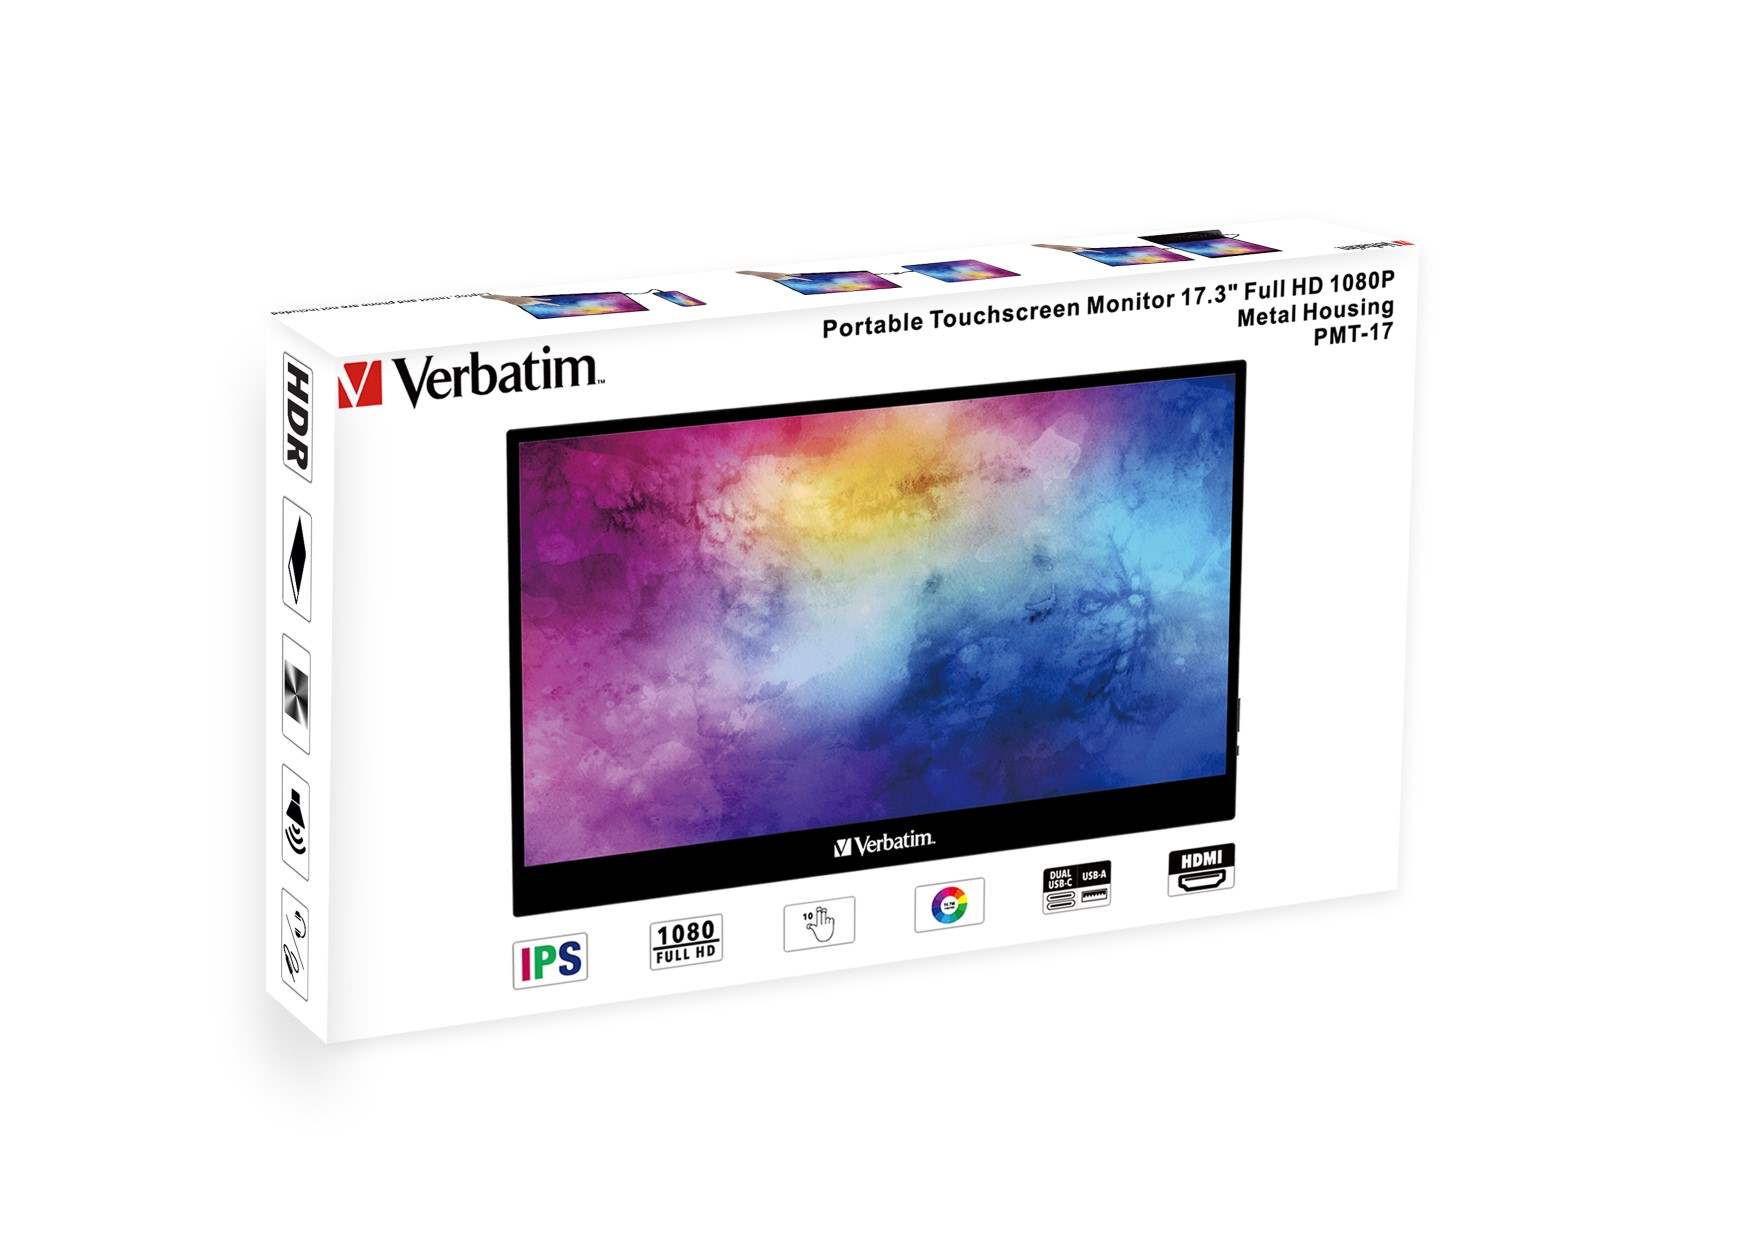 Verbatim PMT-17 Portable Touchscreen Monitor 17.3